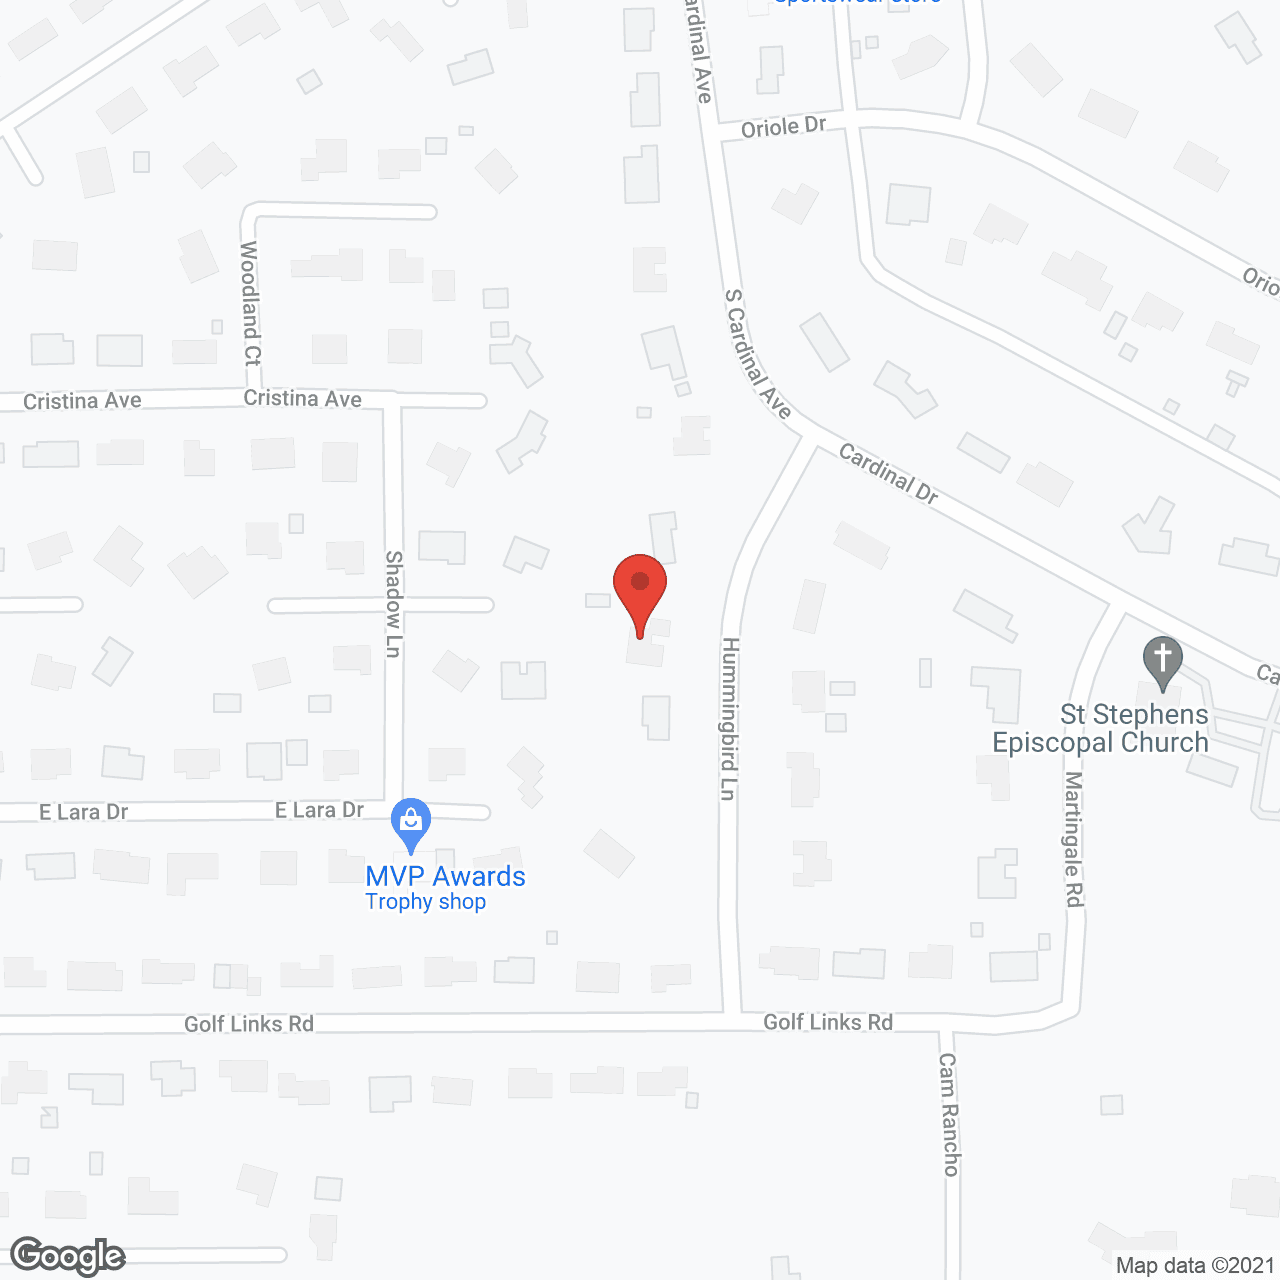 Hummingbird House in google map